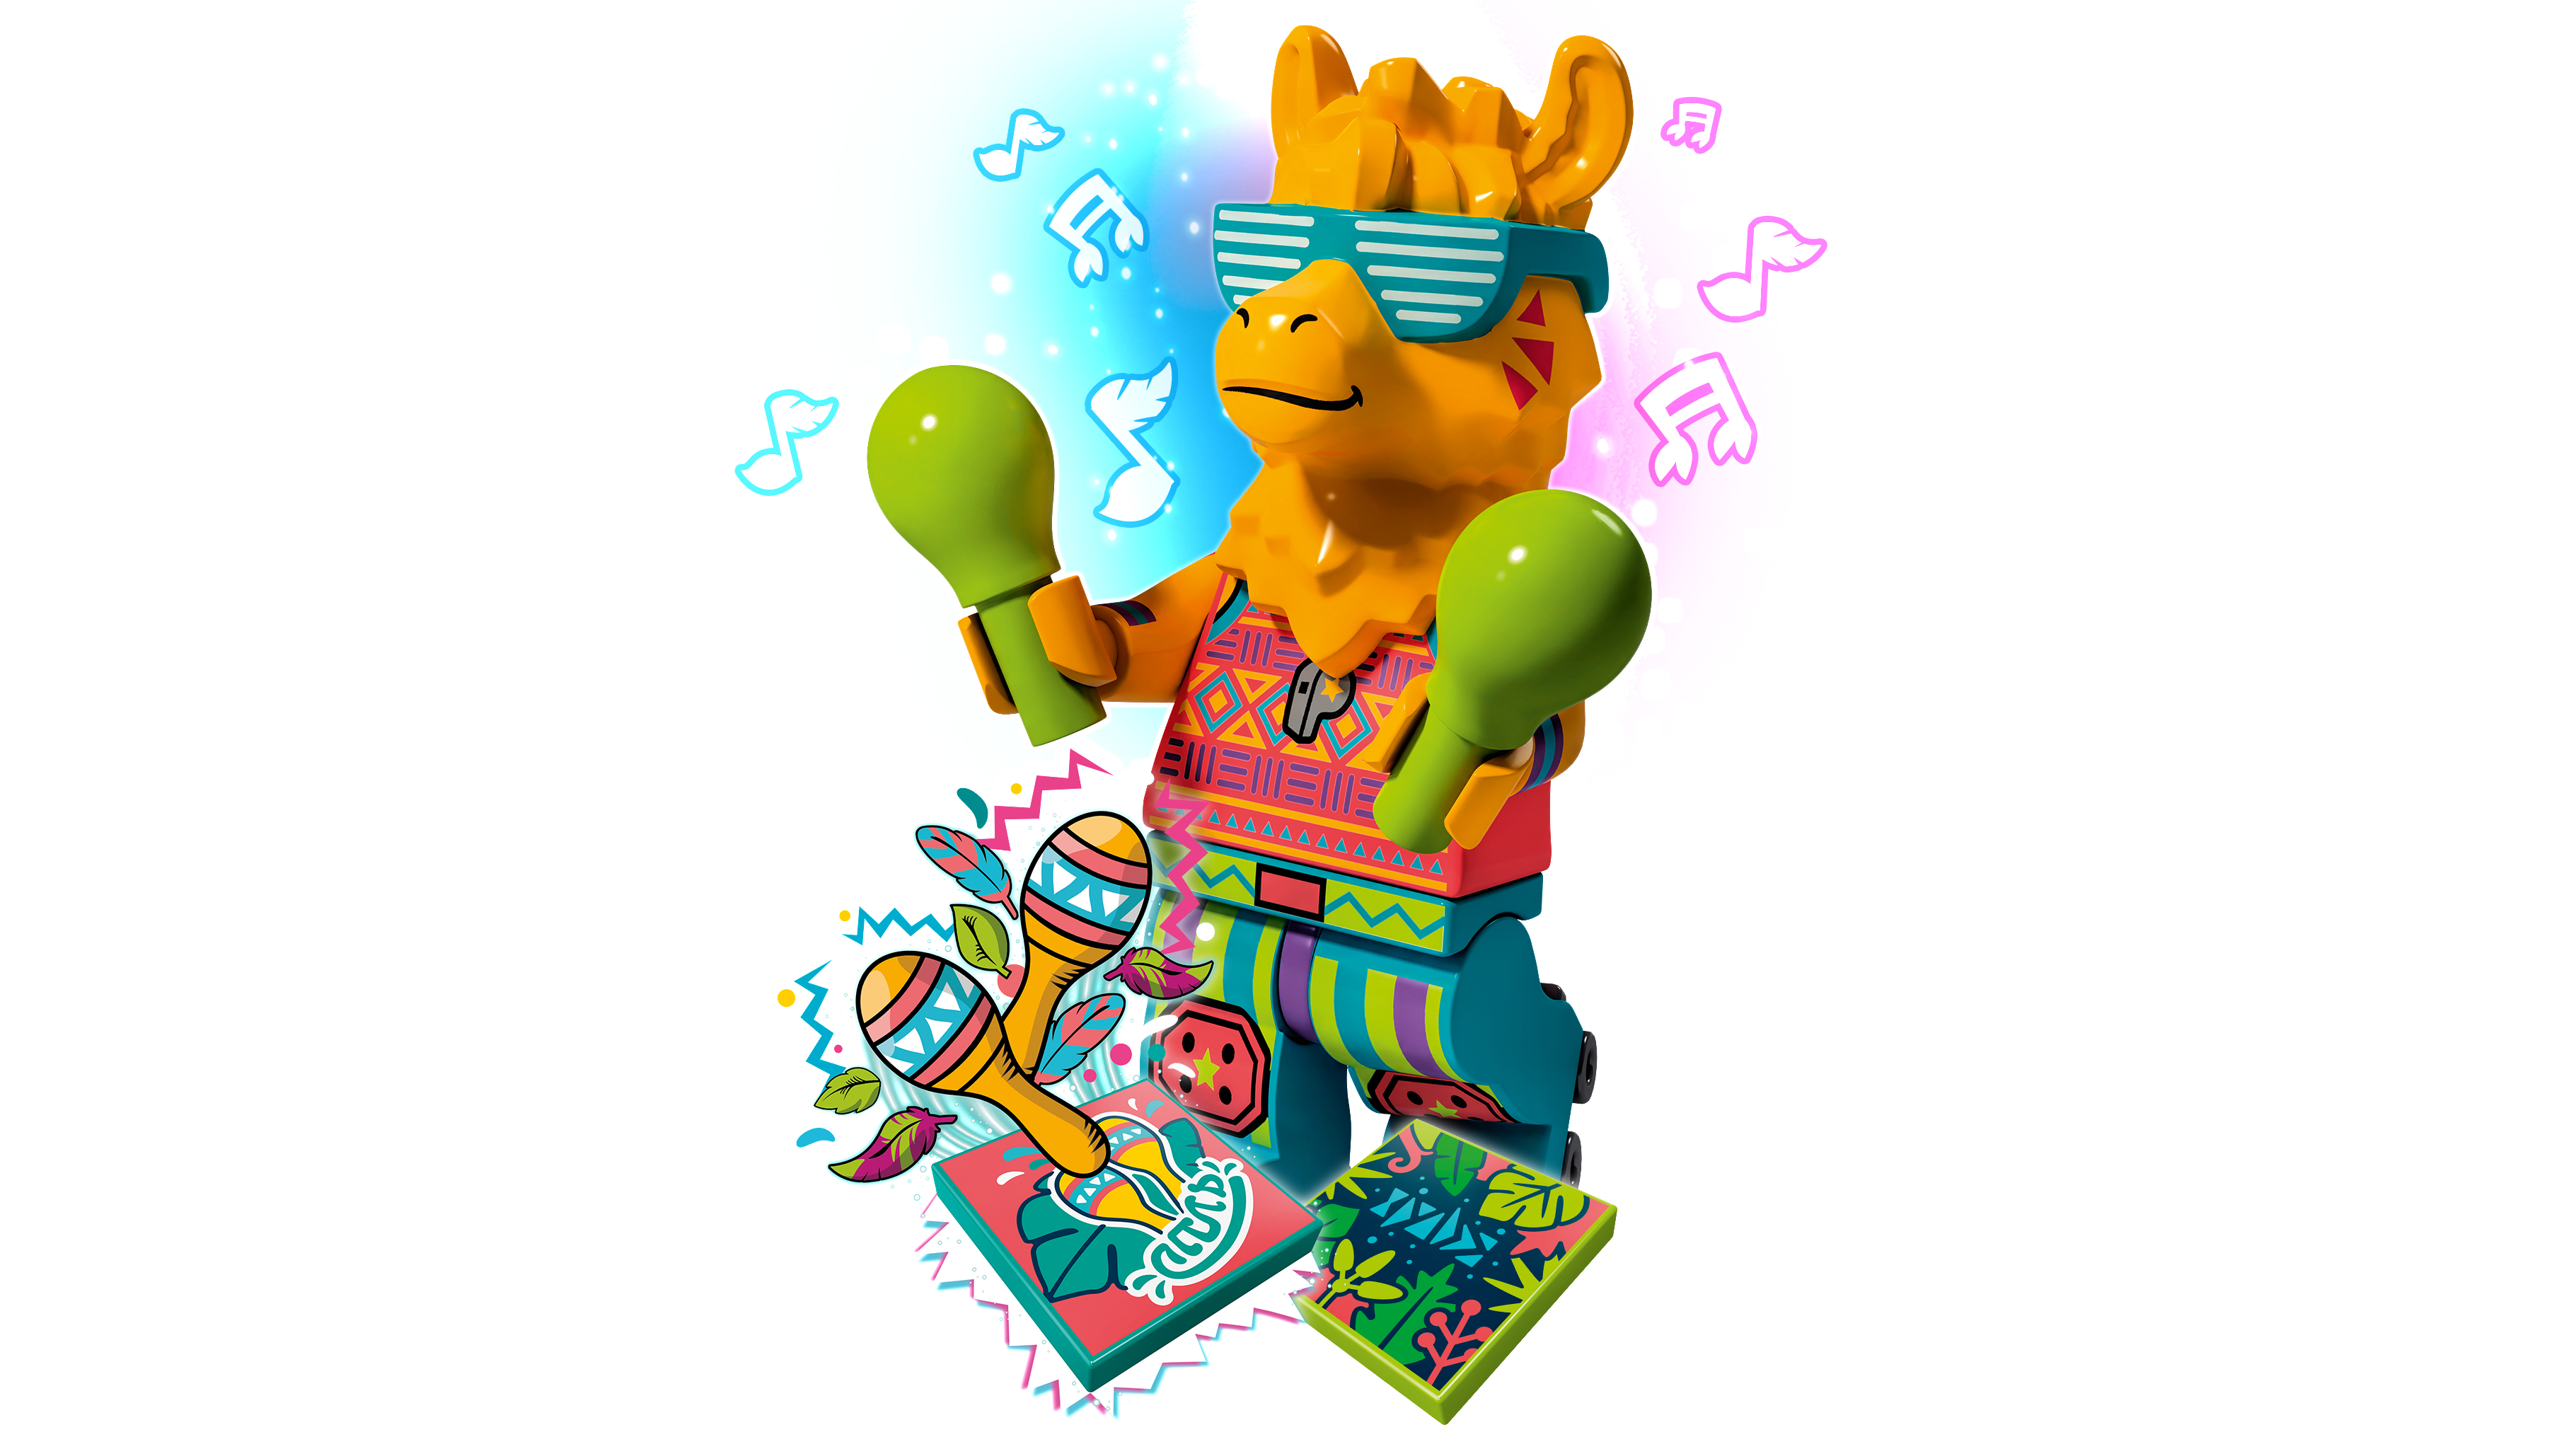 LEGO 43105 Party Llama Mehrfarbig BeatBox Bausatz